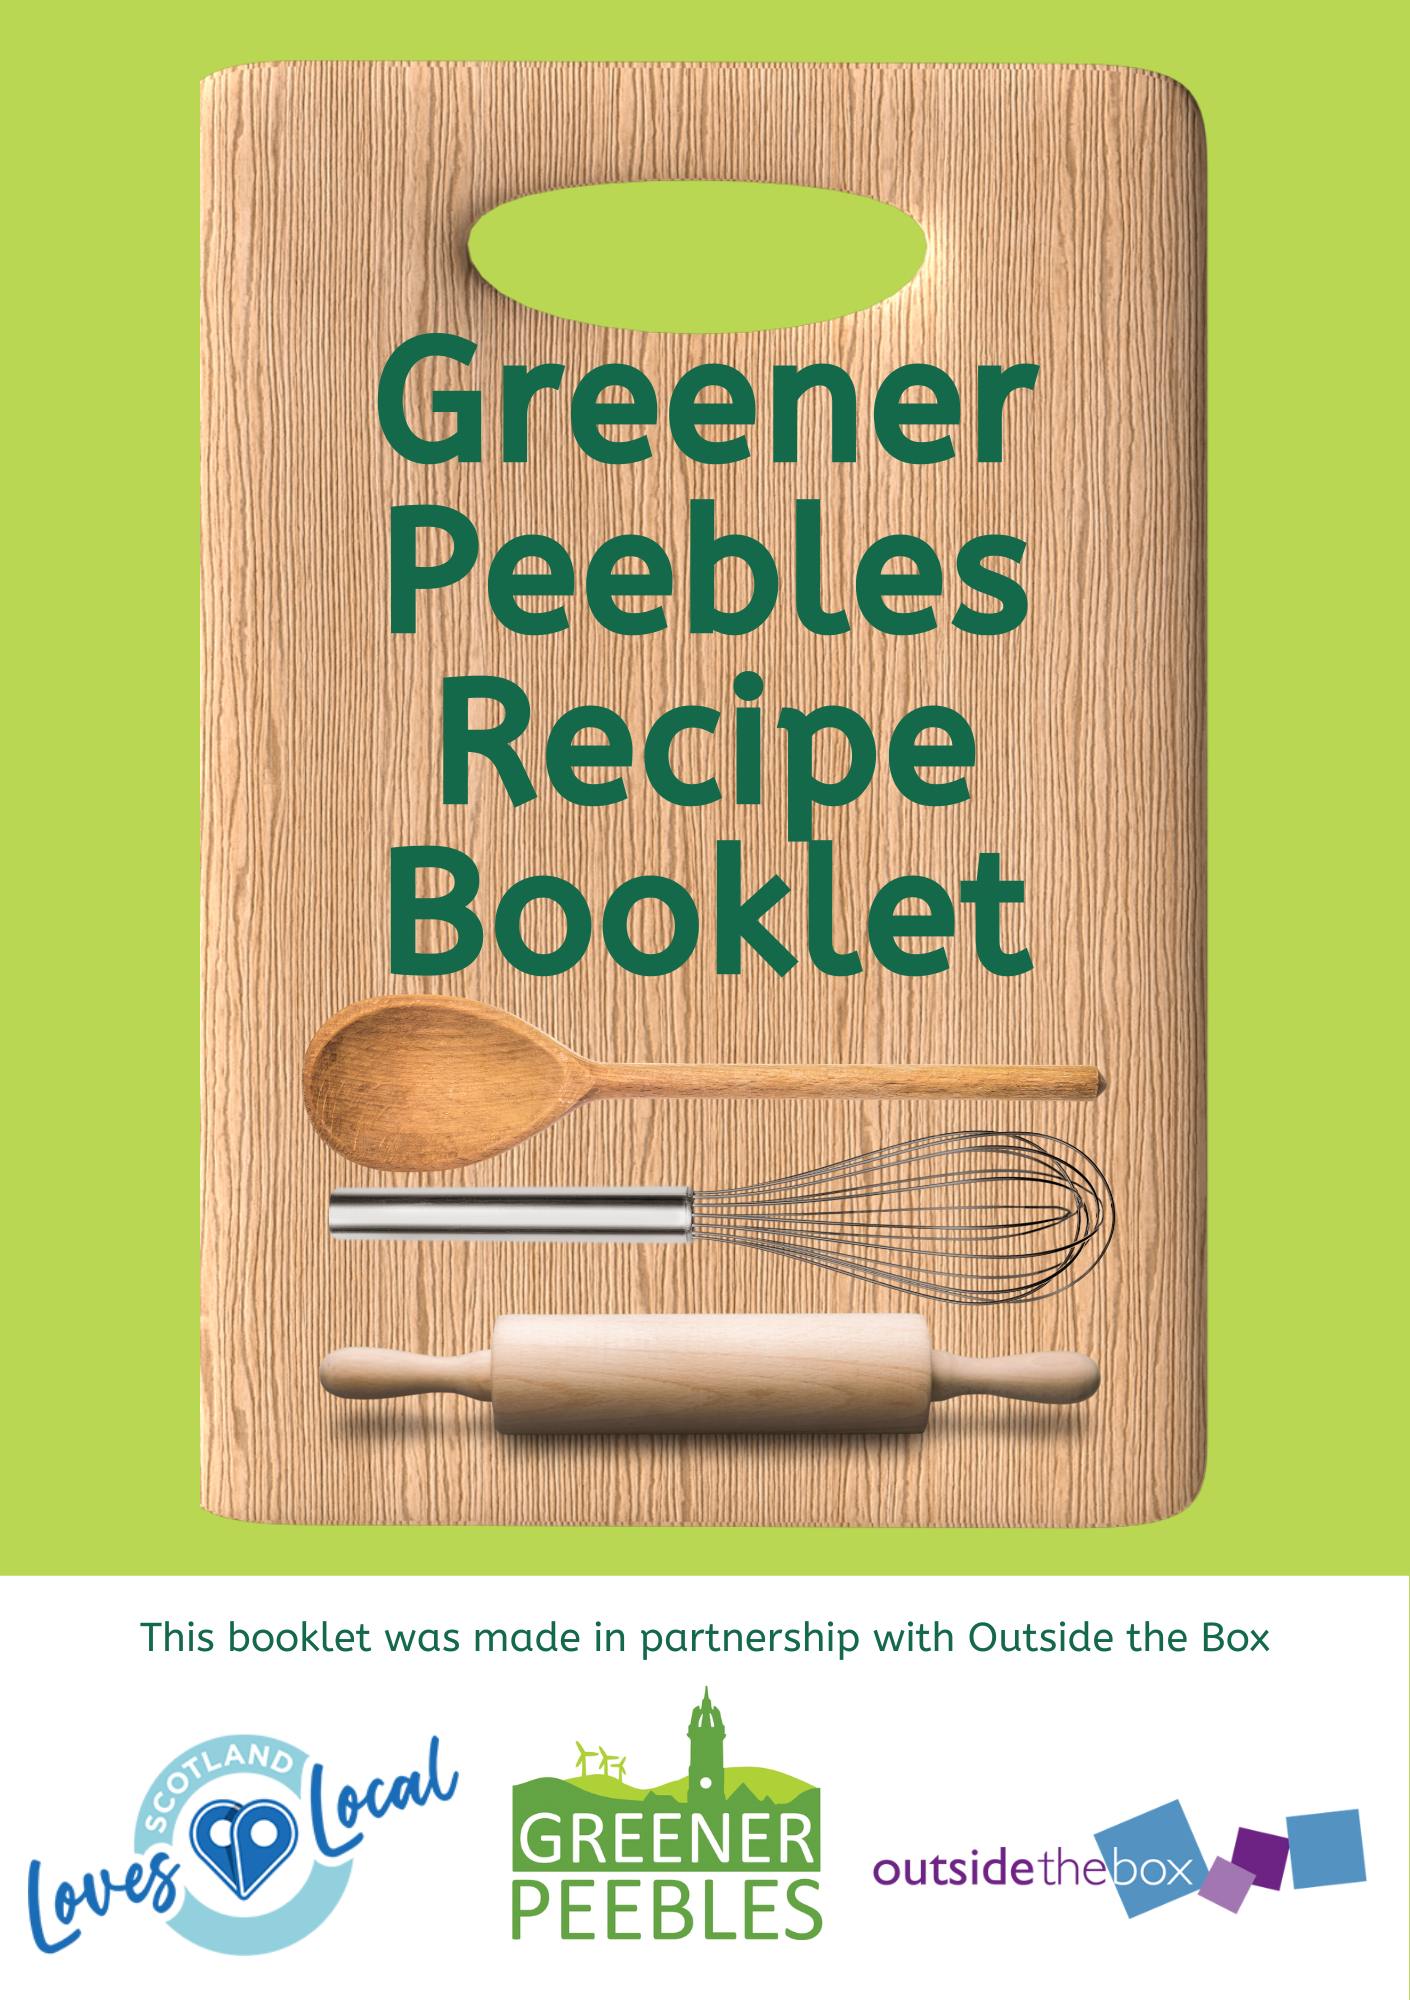 Greener Peebles recipe booklet